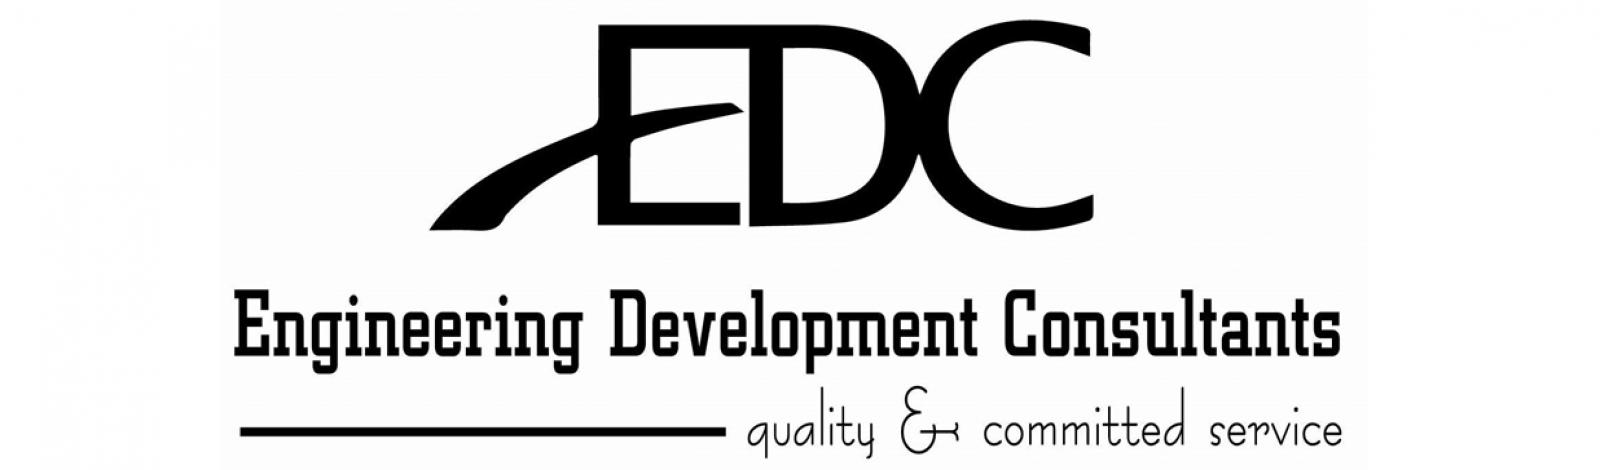 Engineering Development Consultant Ltd. banner